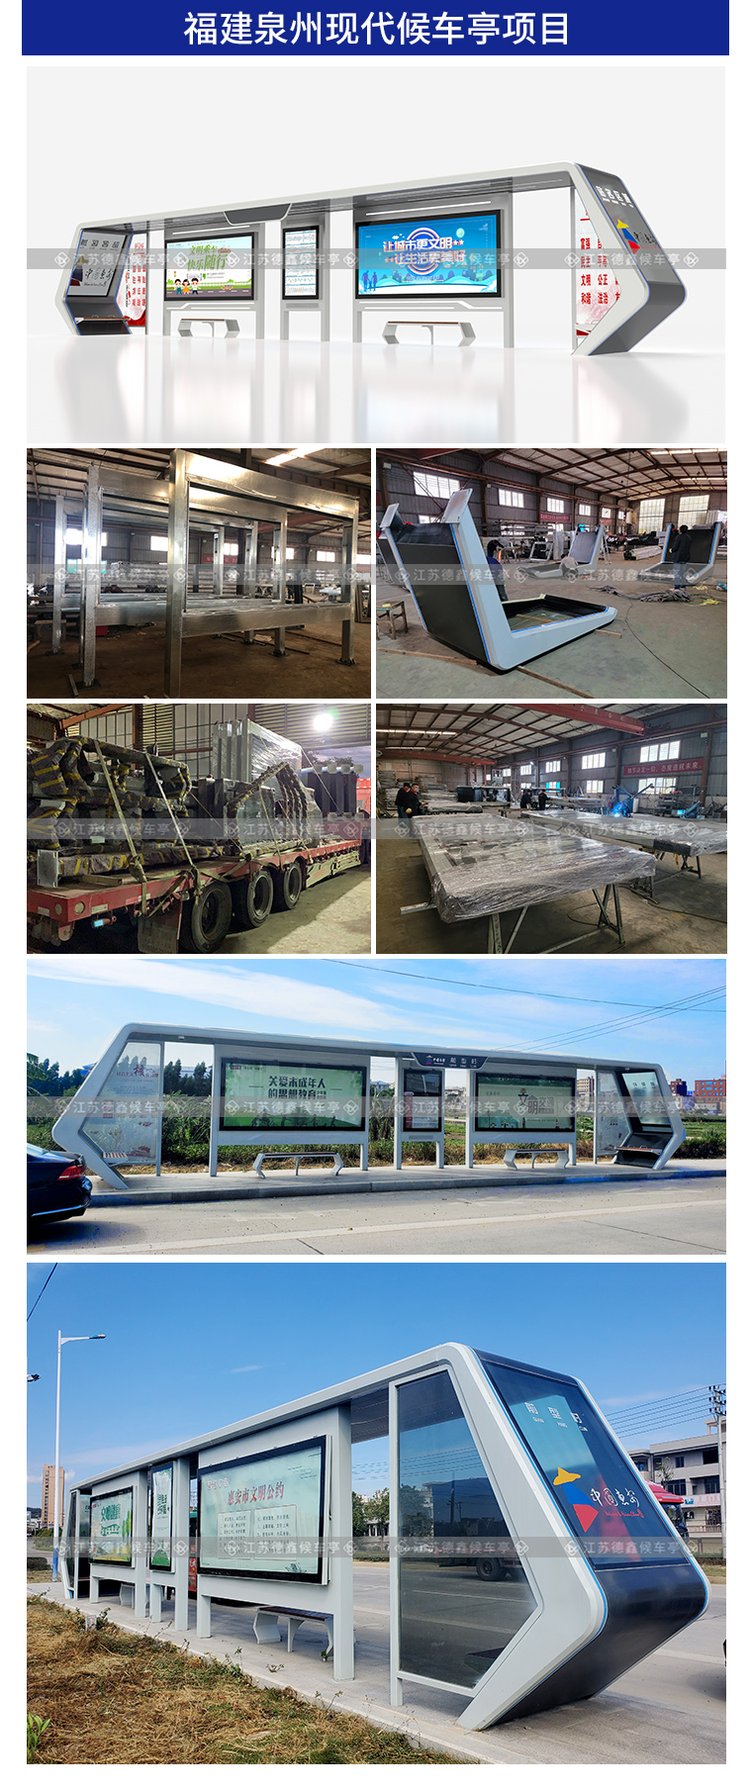 Intelligent Bus Shelter LED Large Screen Advertising Platform Bus Platform New Type of Waiting Hall